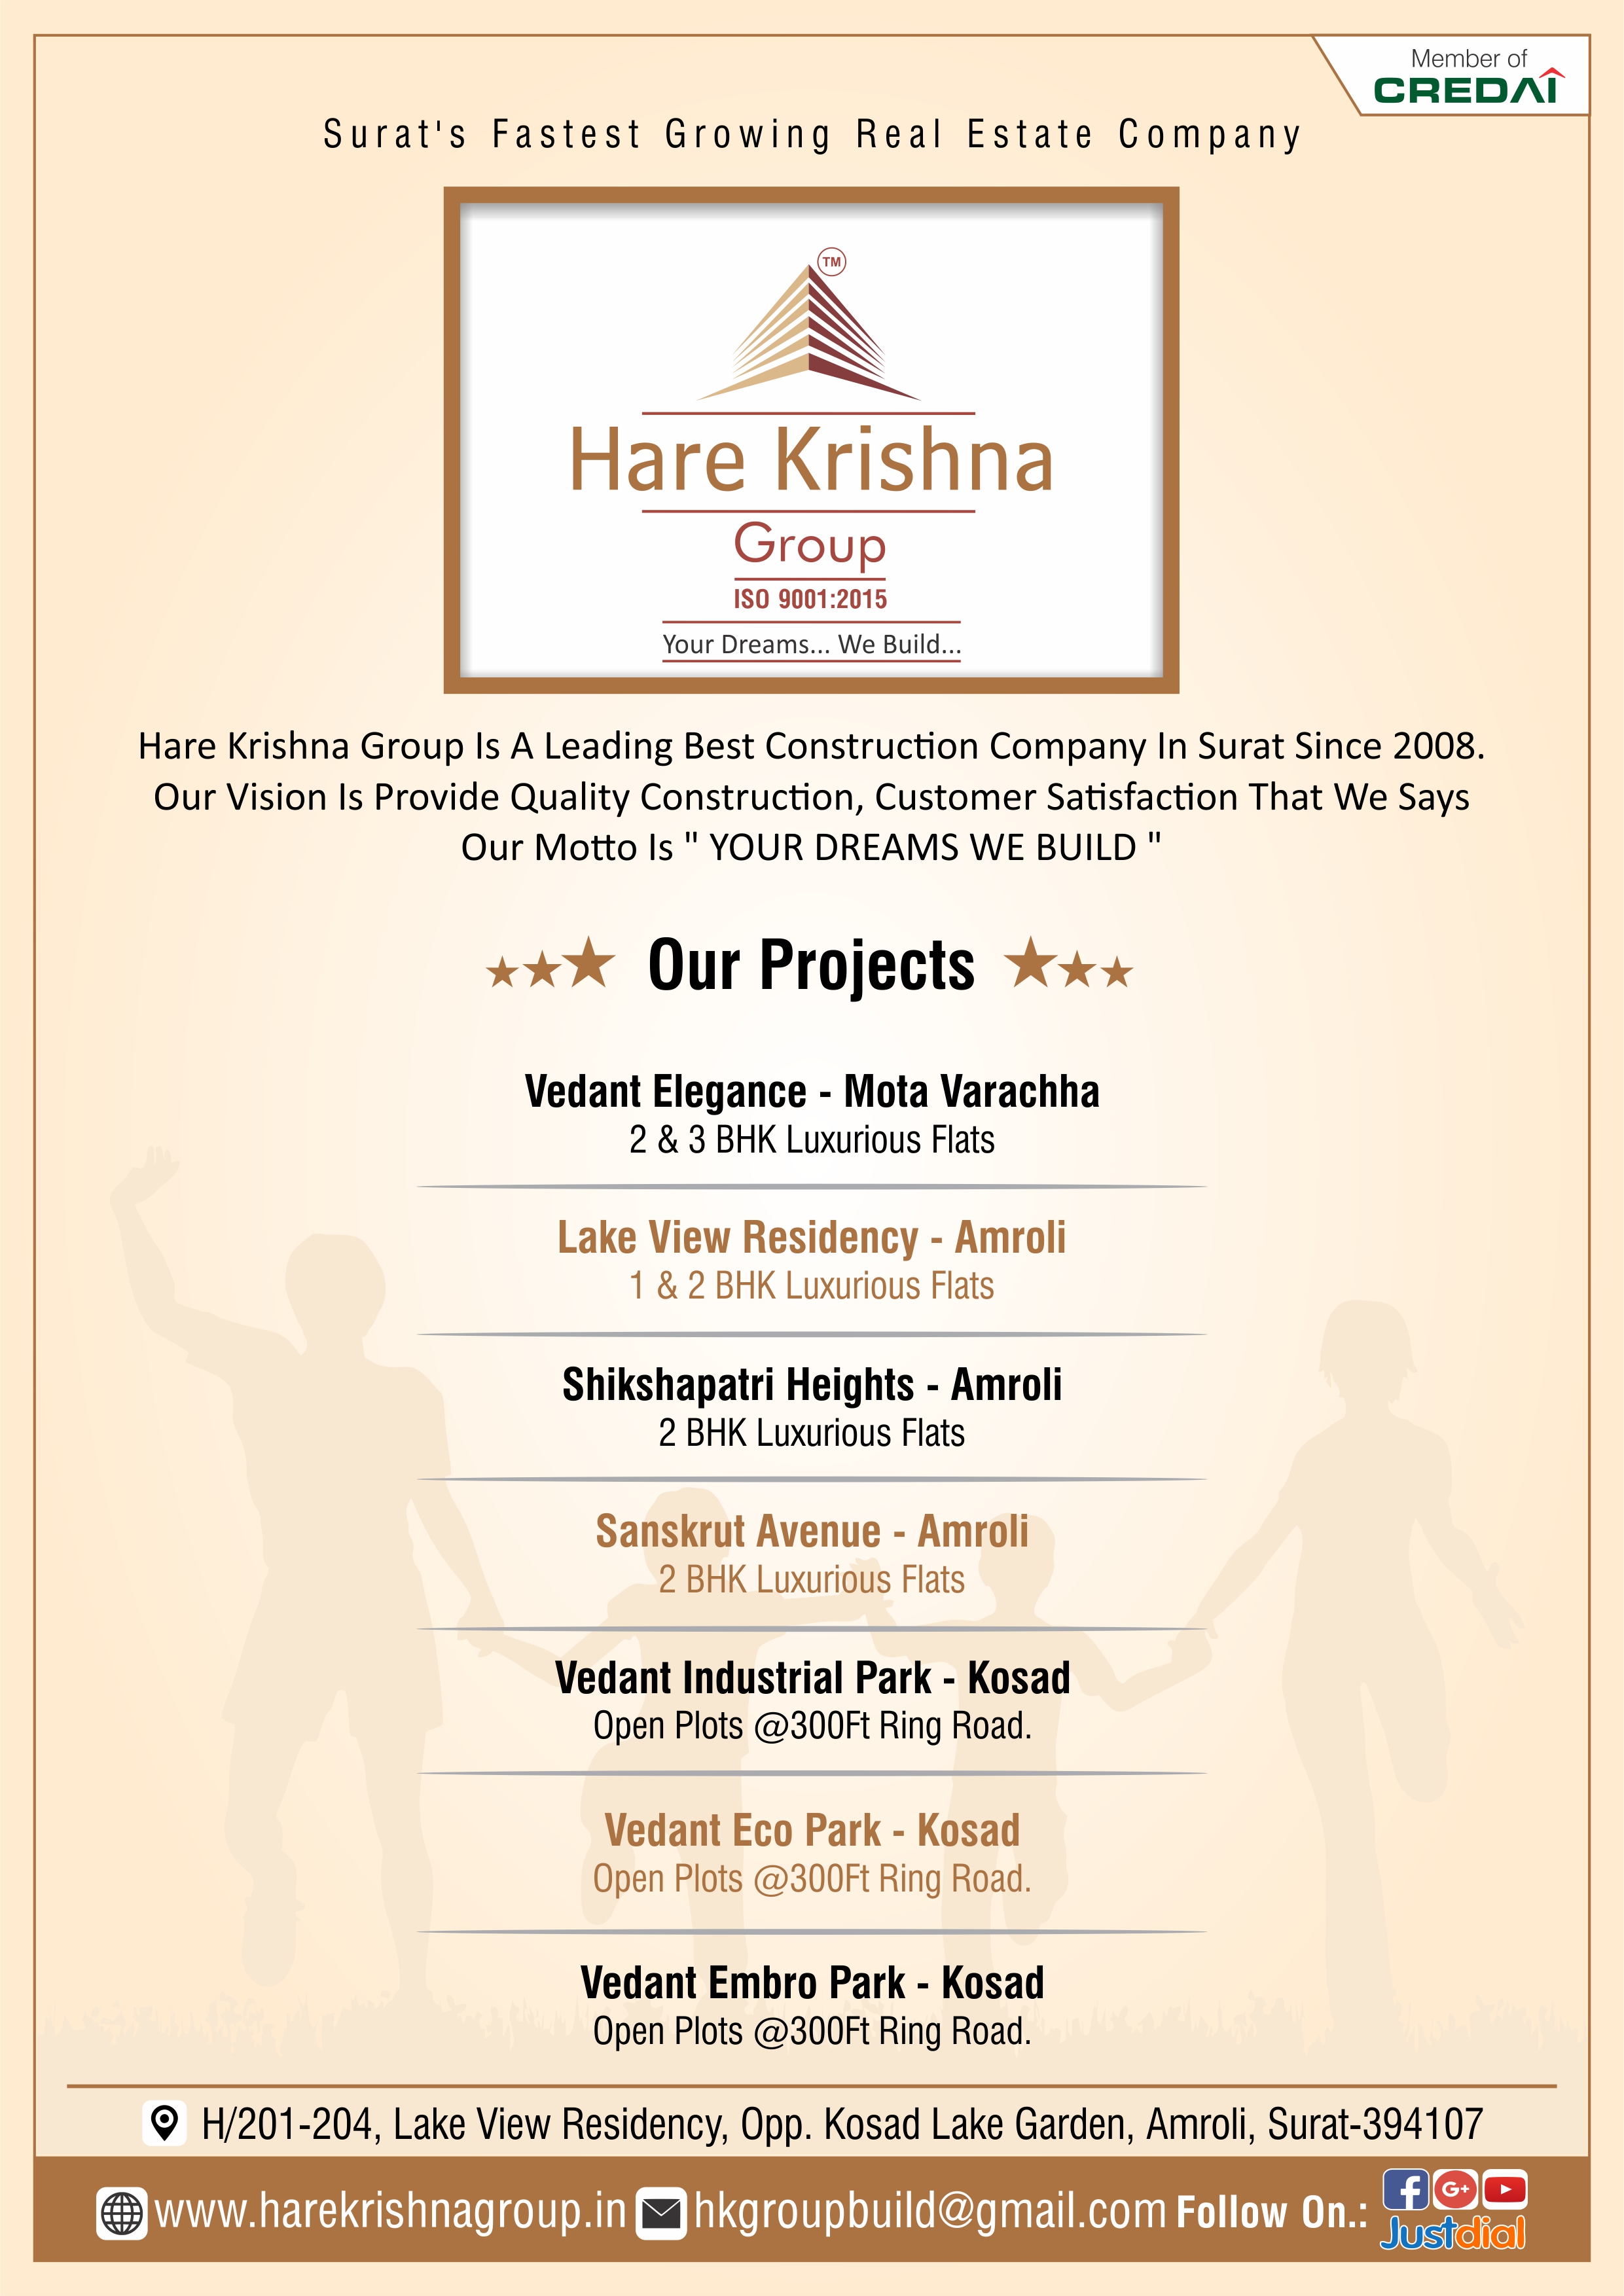 Hare Krishna Group